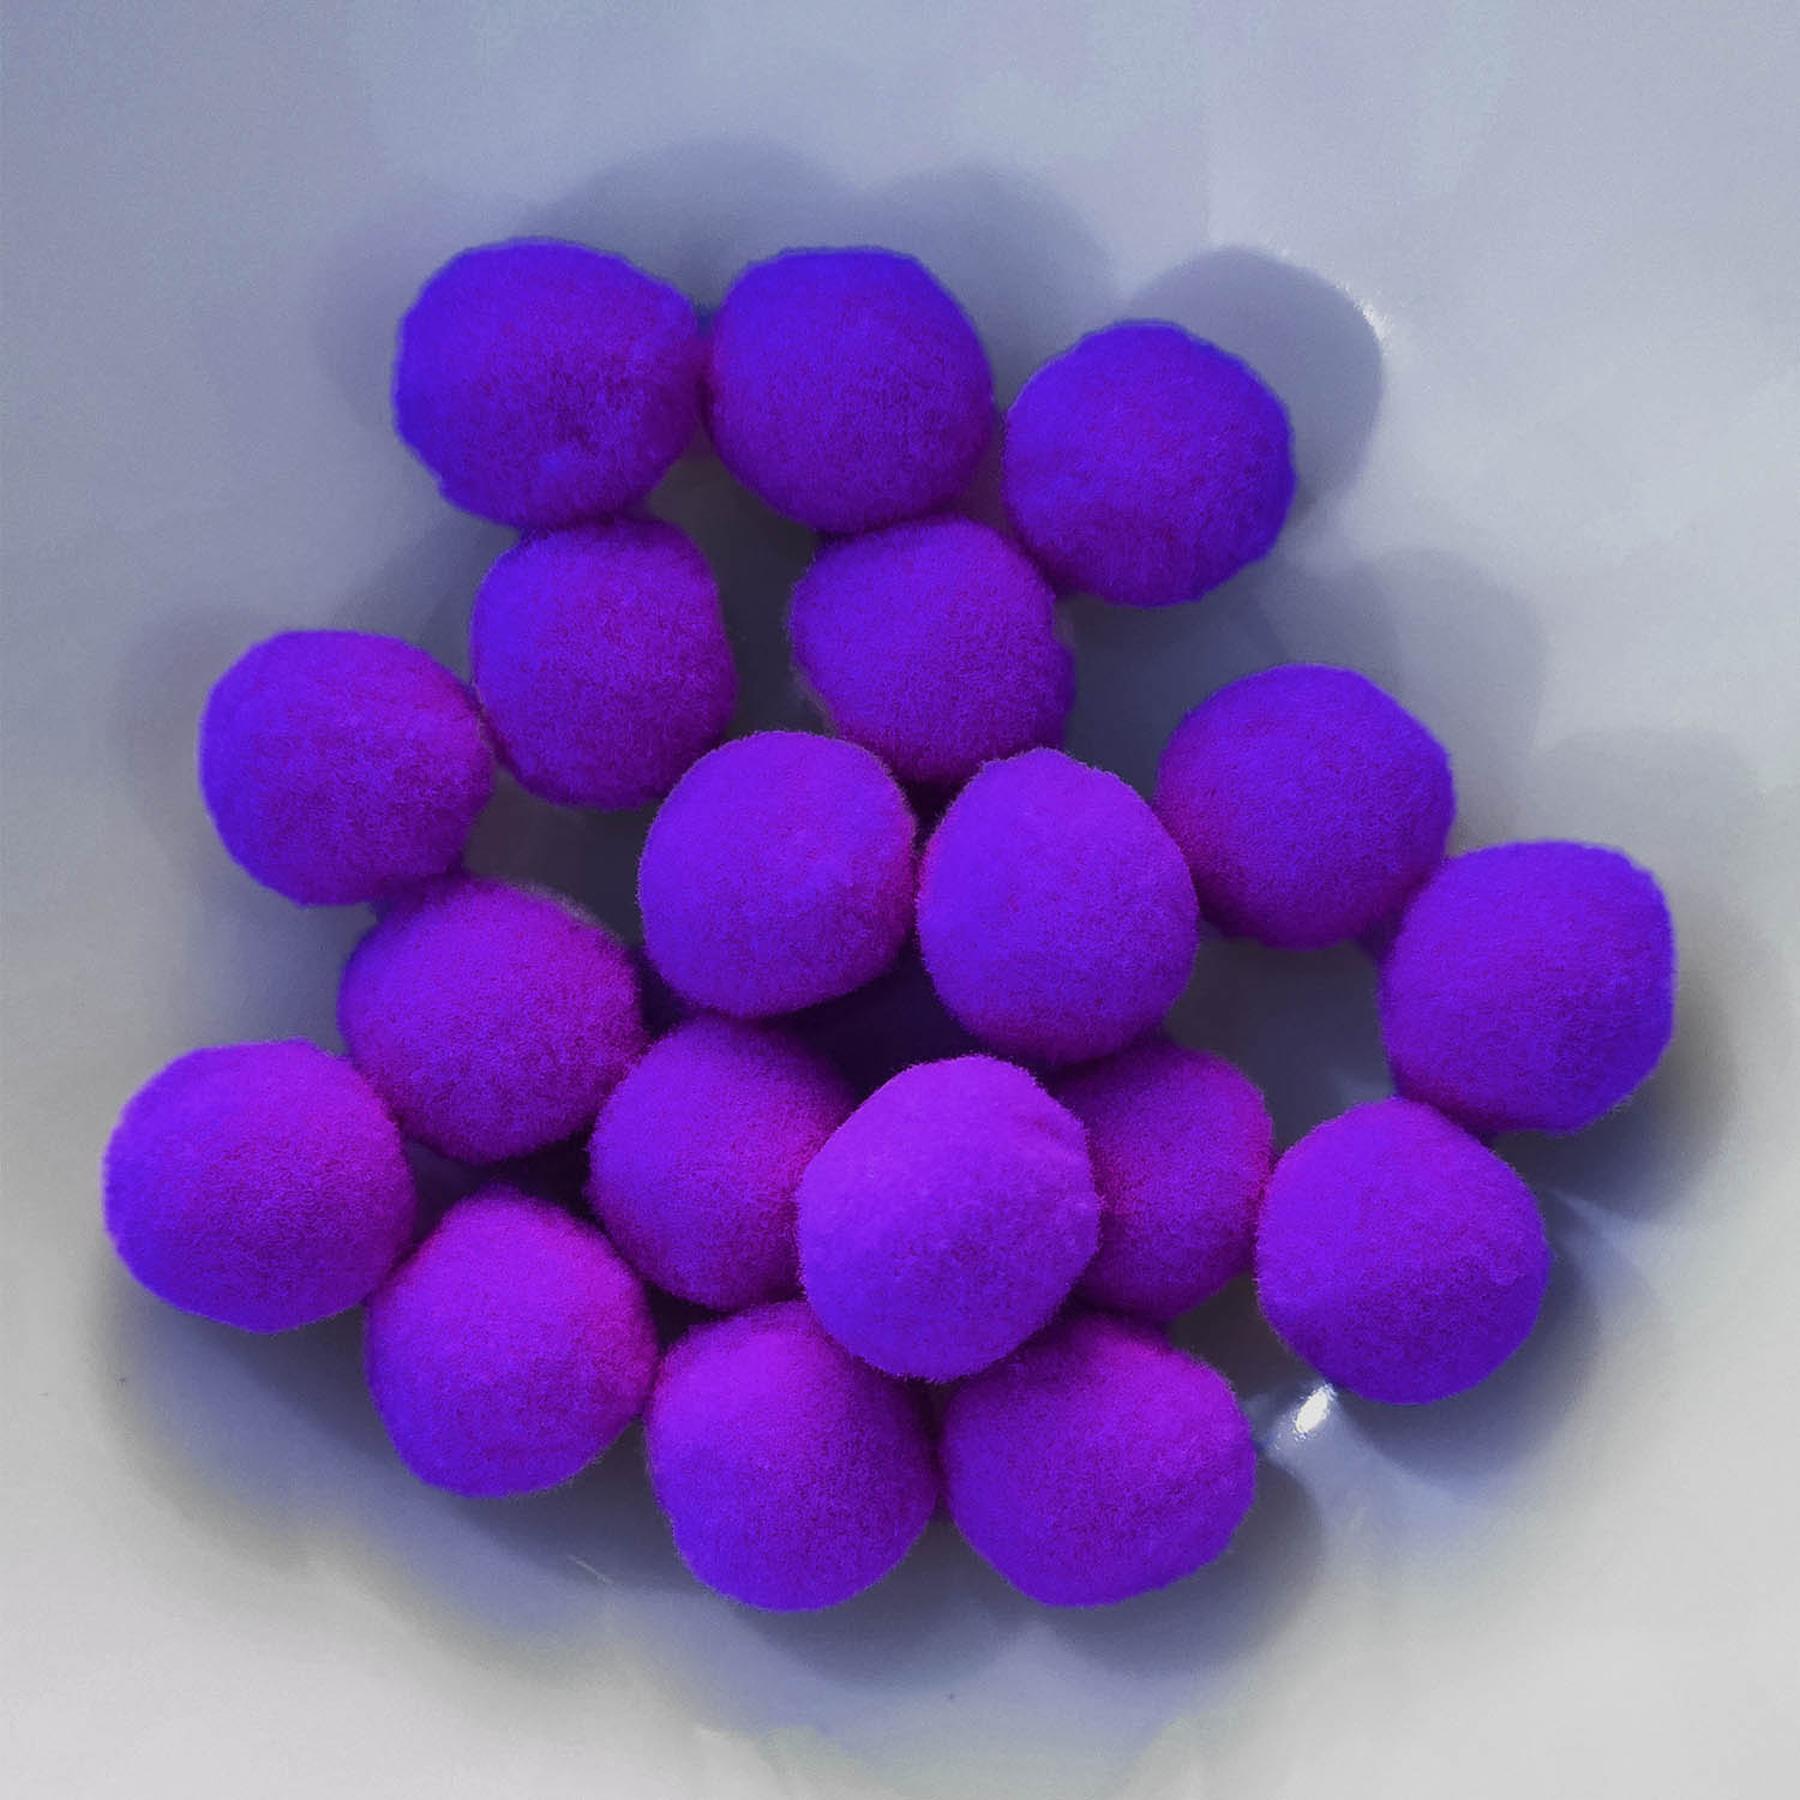 PomPon / Bälle aus Baumwolle - 20 mm / 25er Set - Flieder dunkel